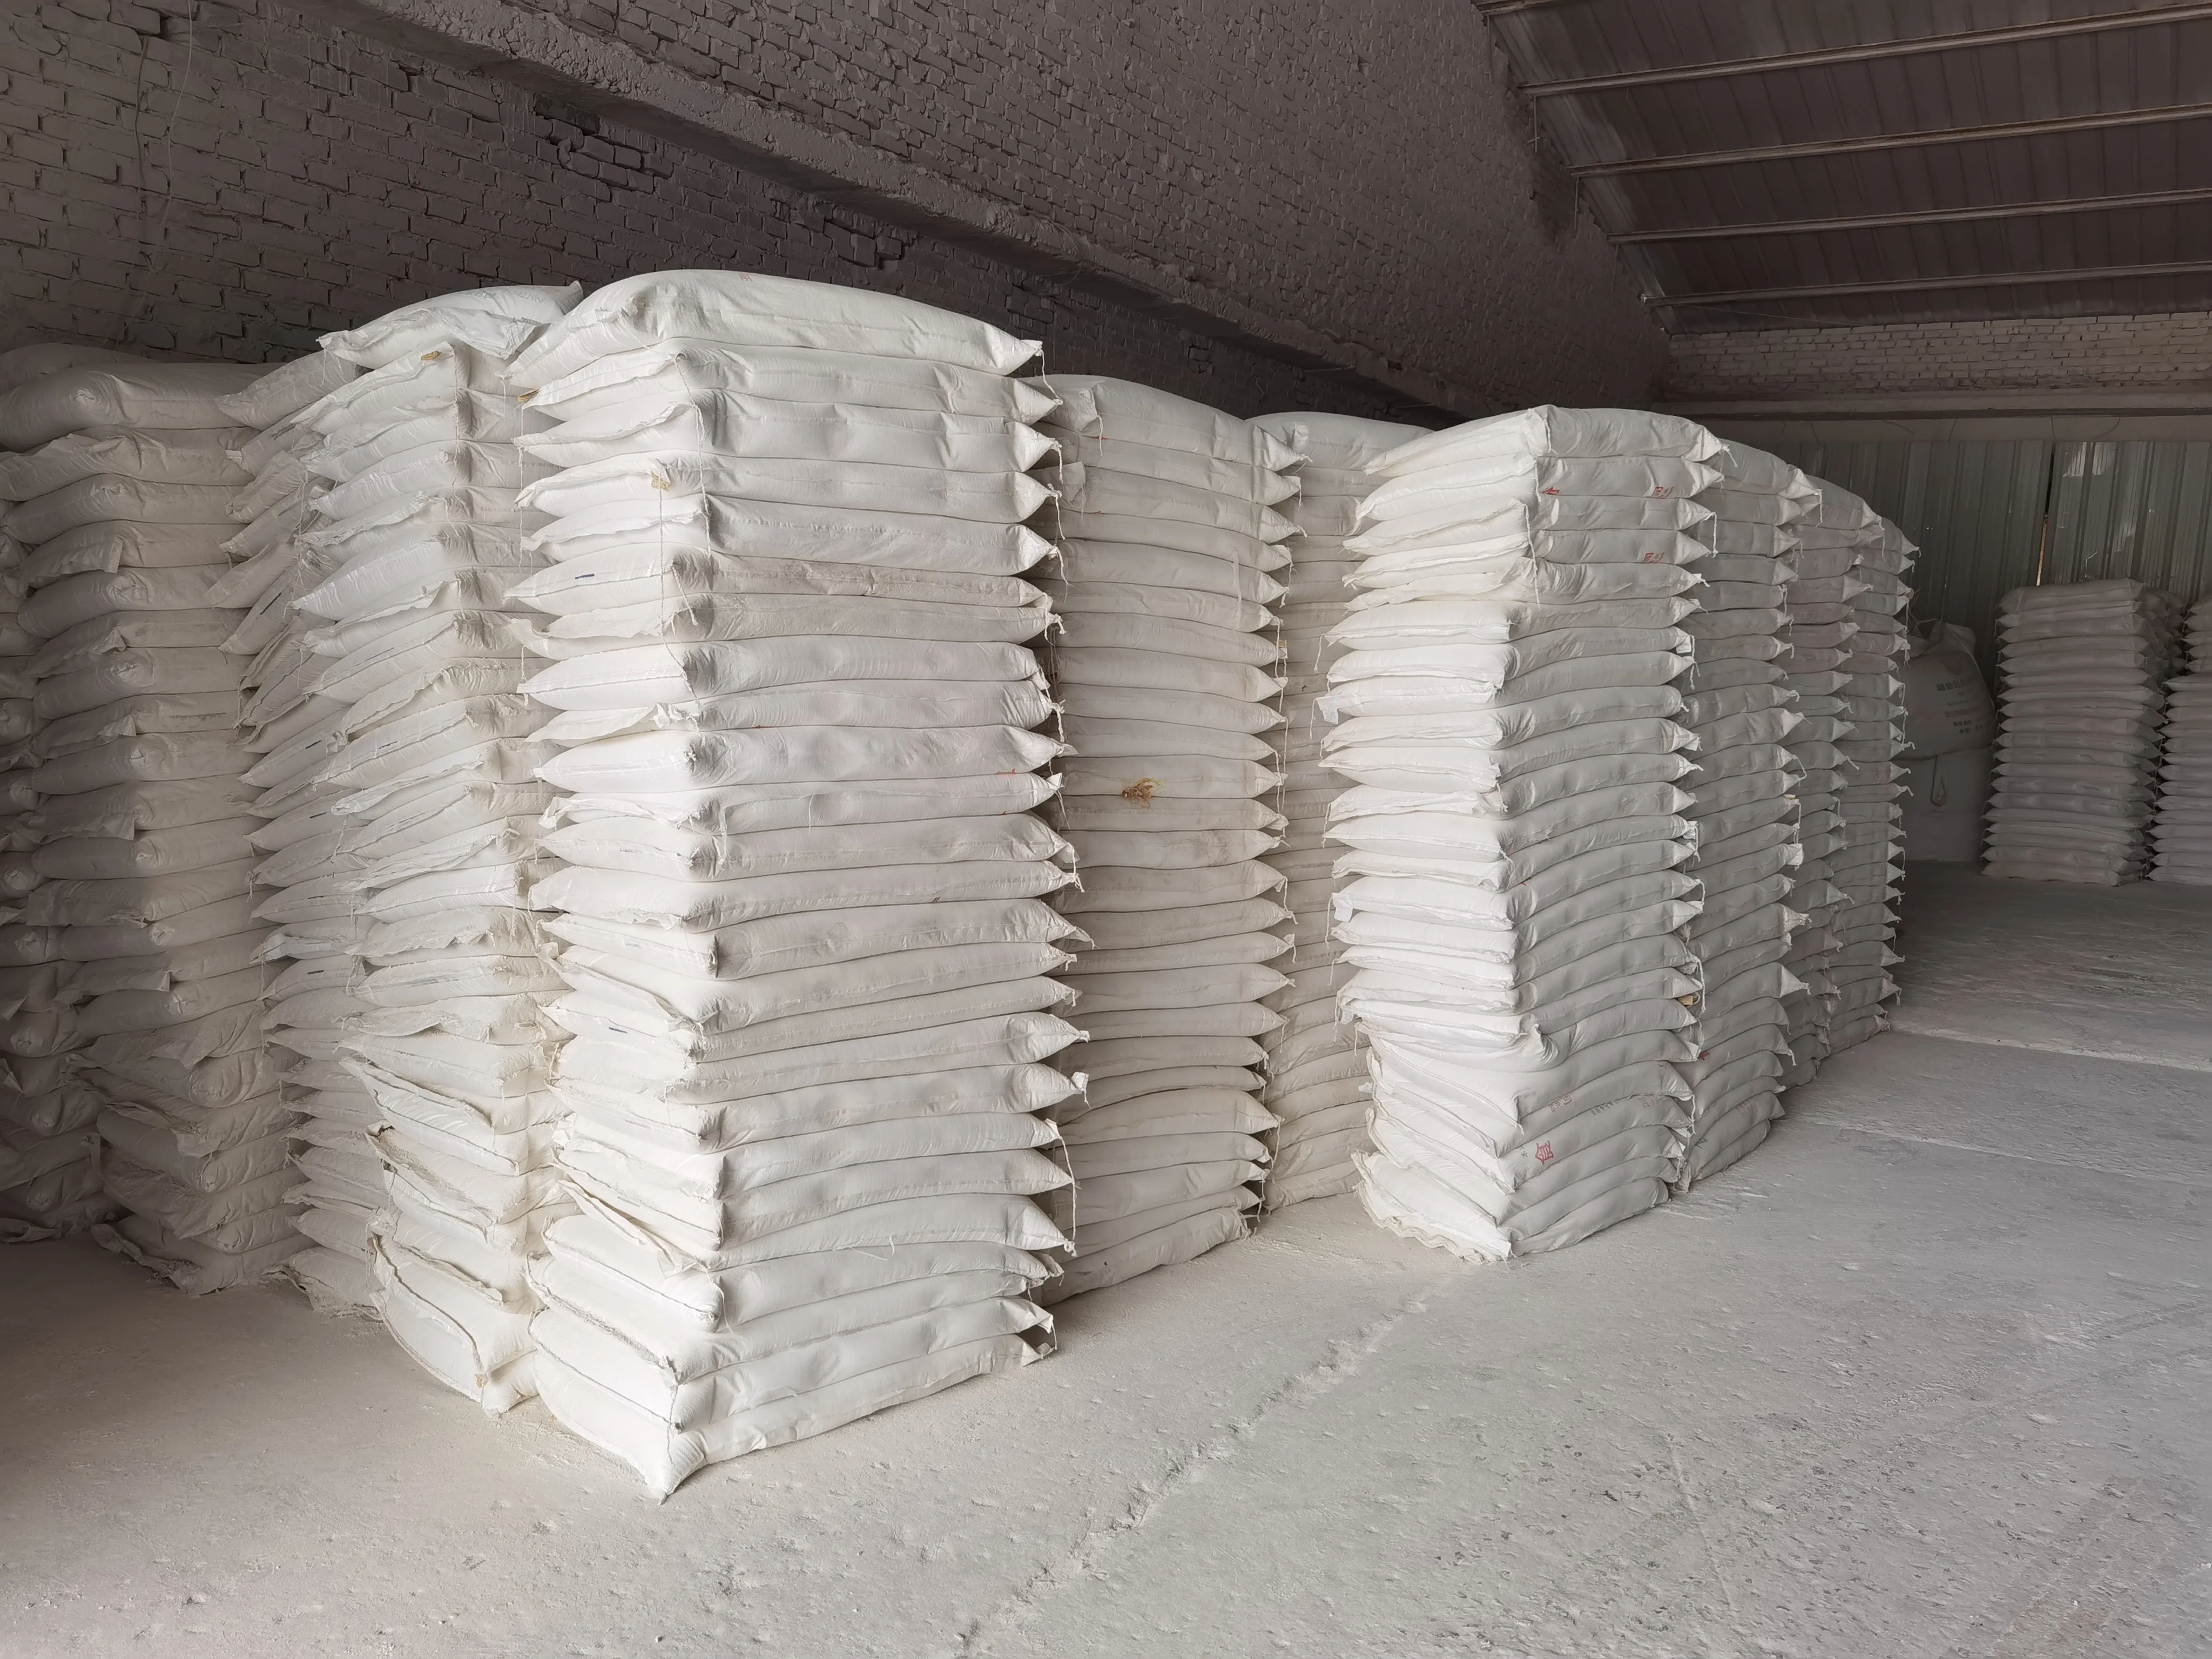 Sale Plastic Grade 625 Mesh Super Fine White Calcined Talc Crushed Powder 25kg Drum for frp Tile PVC Rubber Paper Making Filler